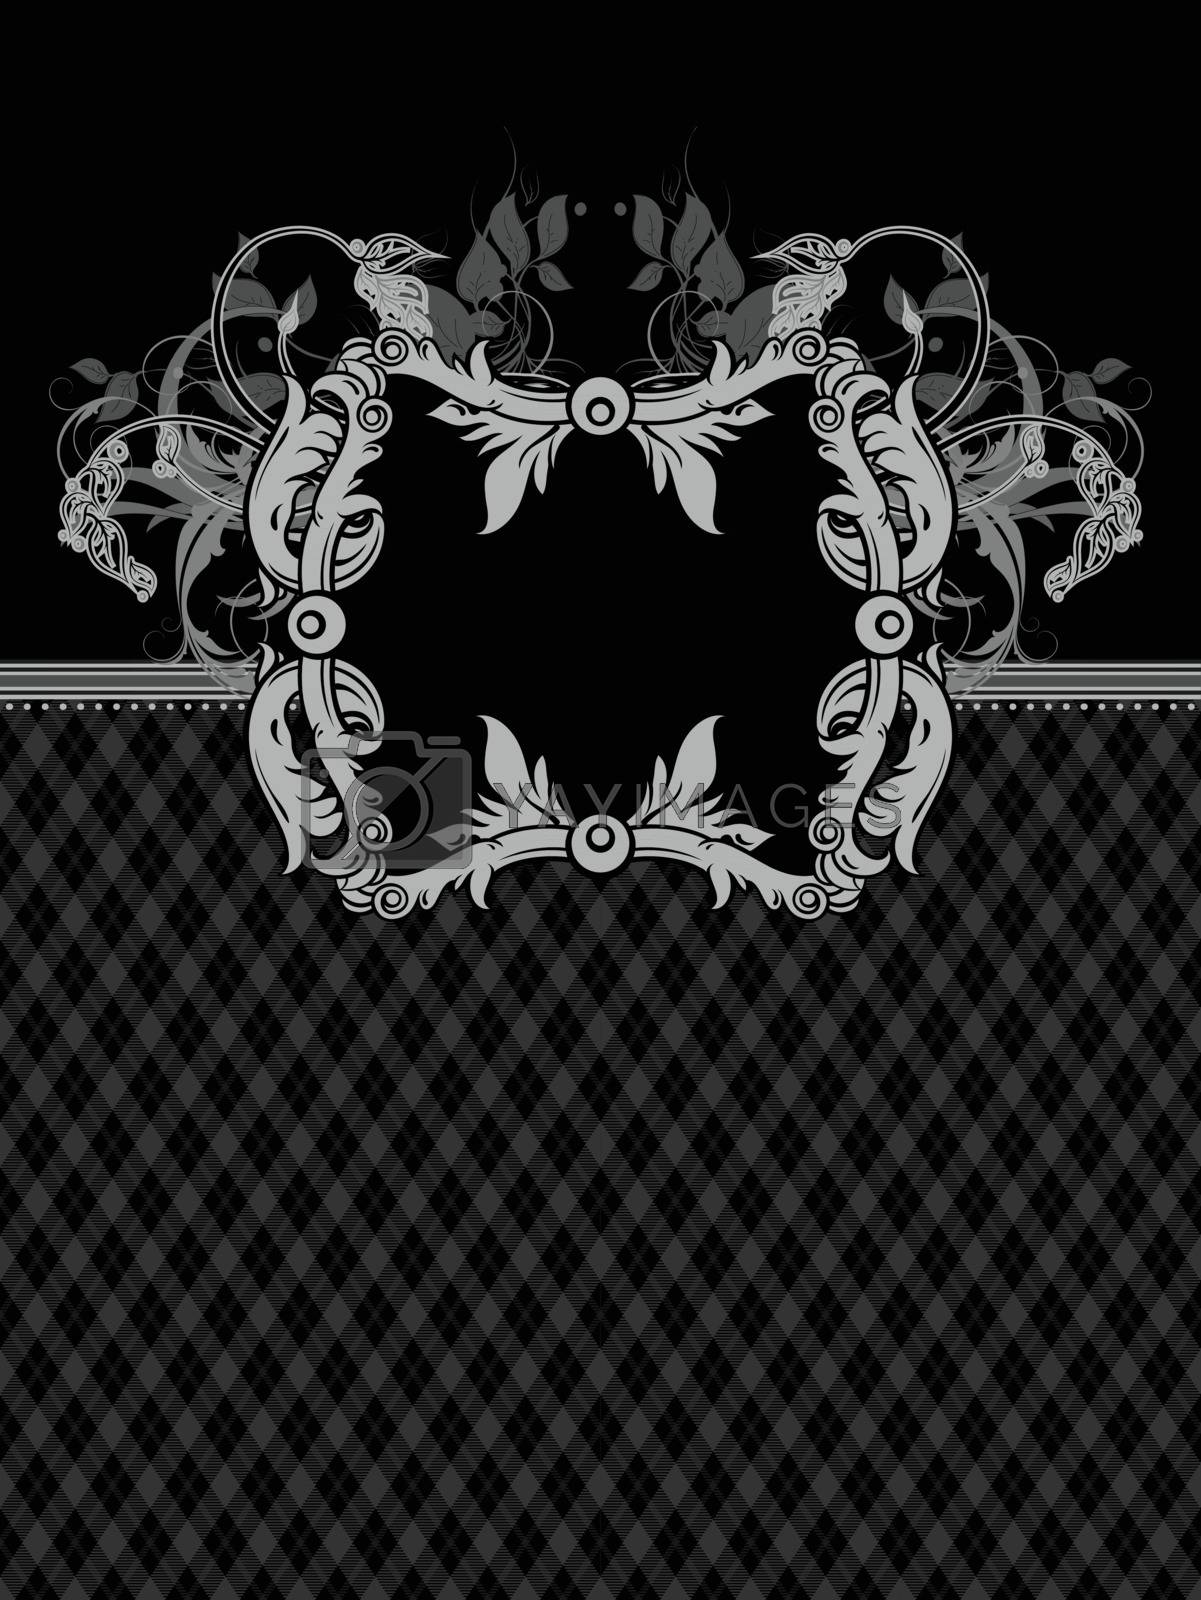 Royalty free image of ornate frame by kjolak